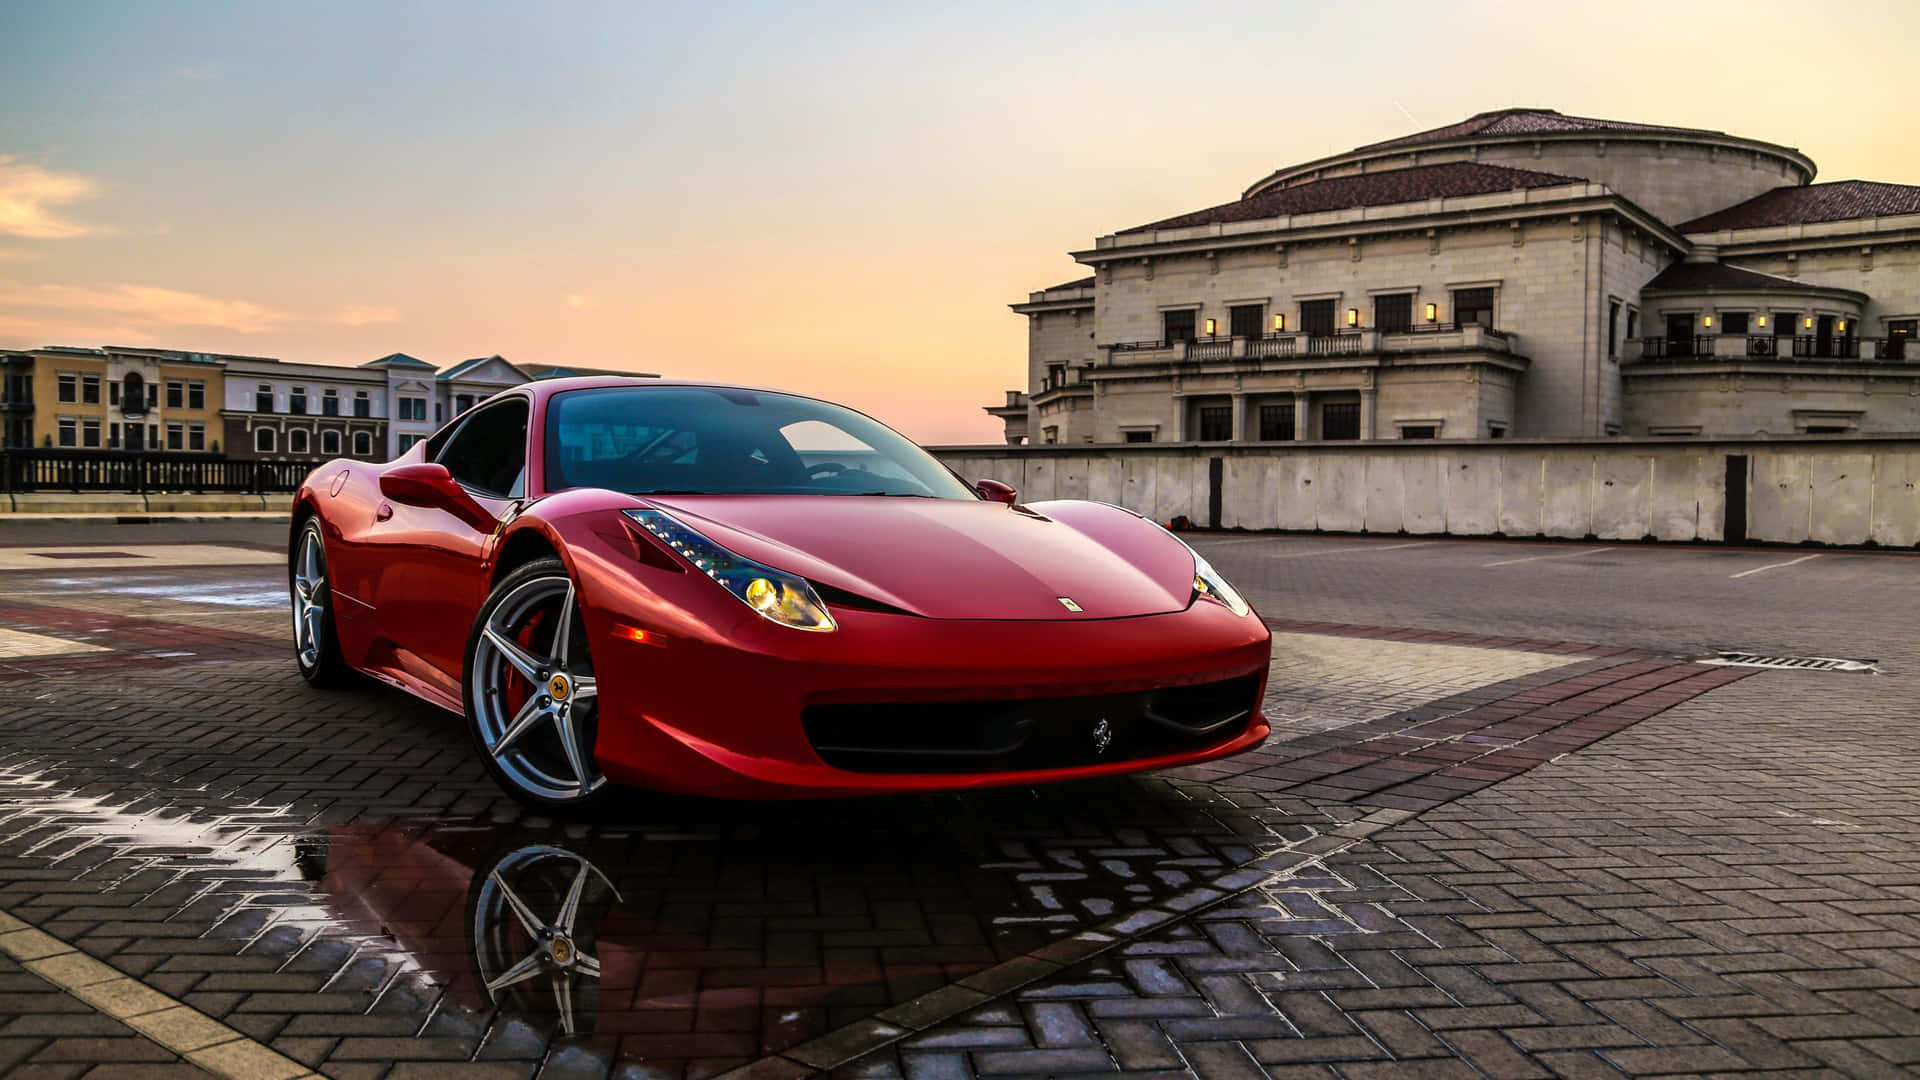 Take a ride in this 4k Ferrari